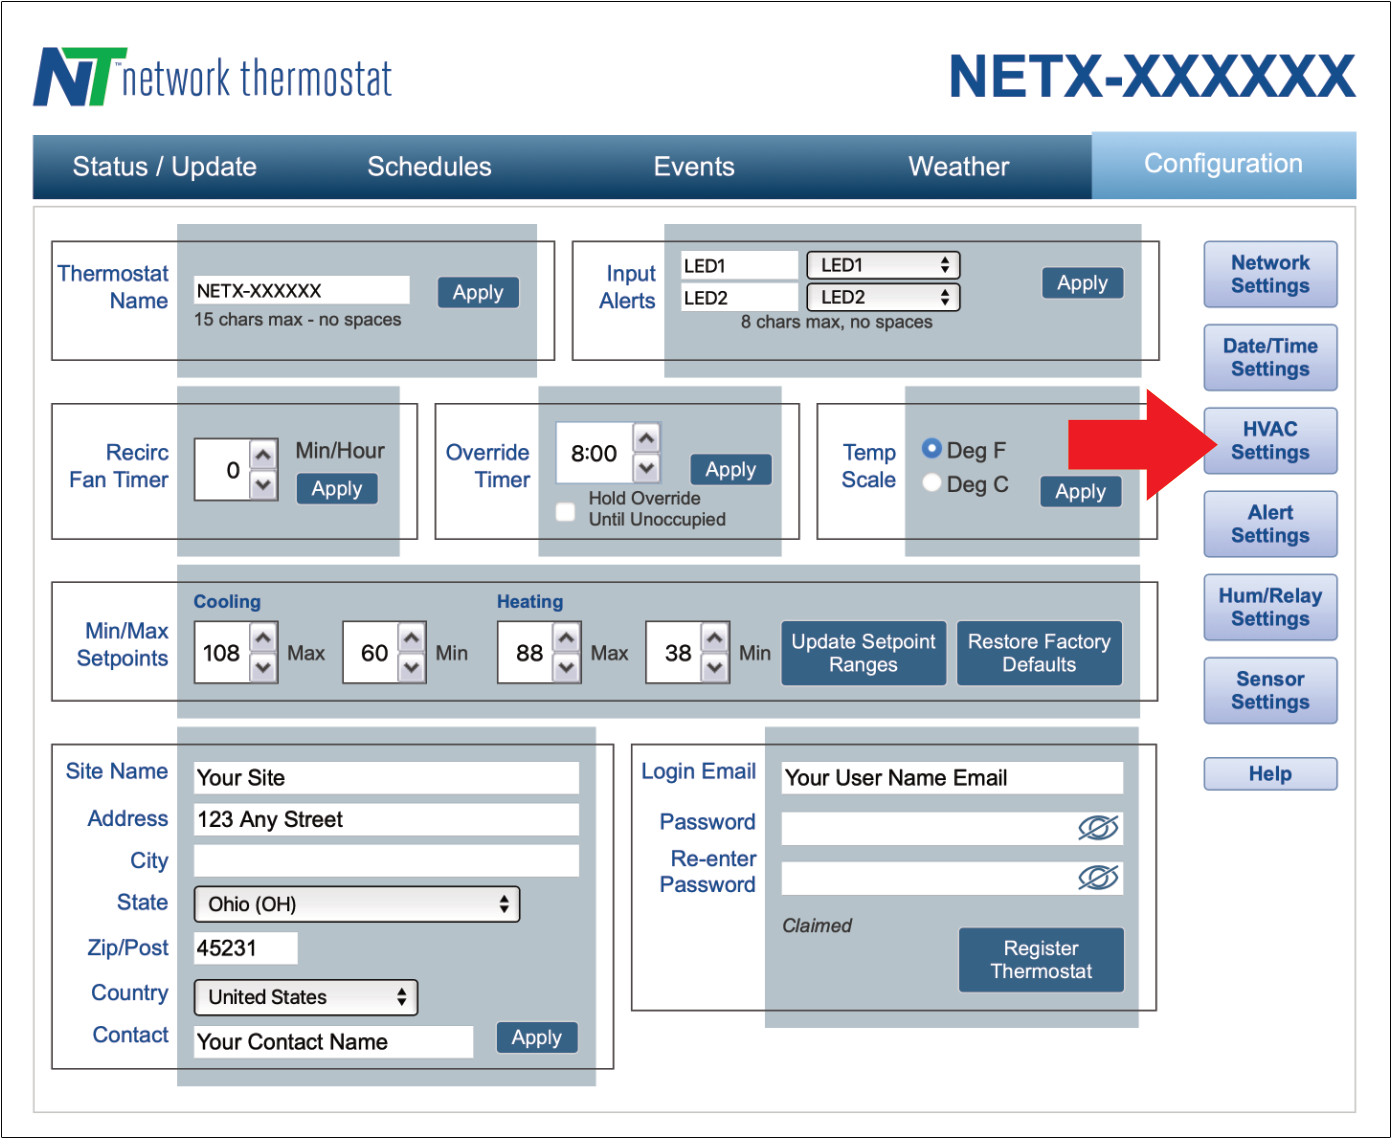 NetX HVAC Settings Link